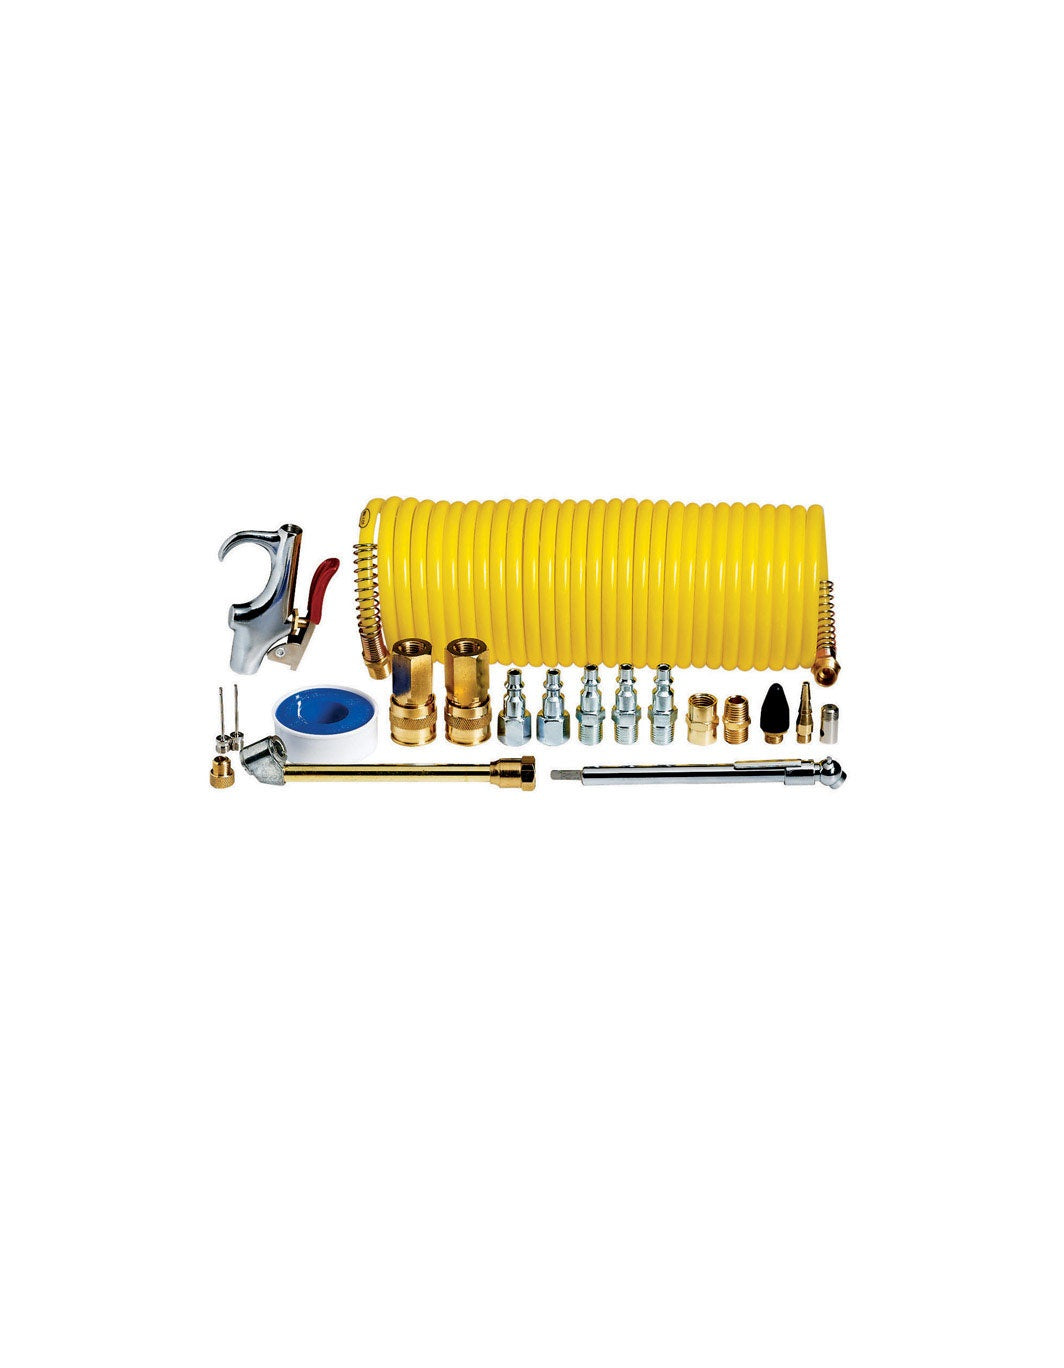 Craftsman CMXZTSG1139NB Air Compressor Accessory Kit, 20 Piece